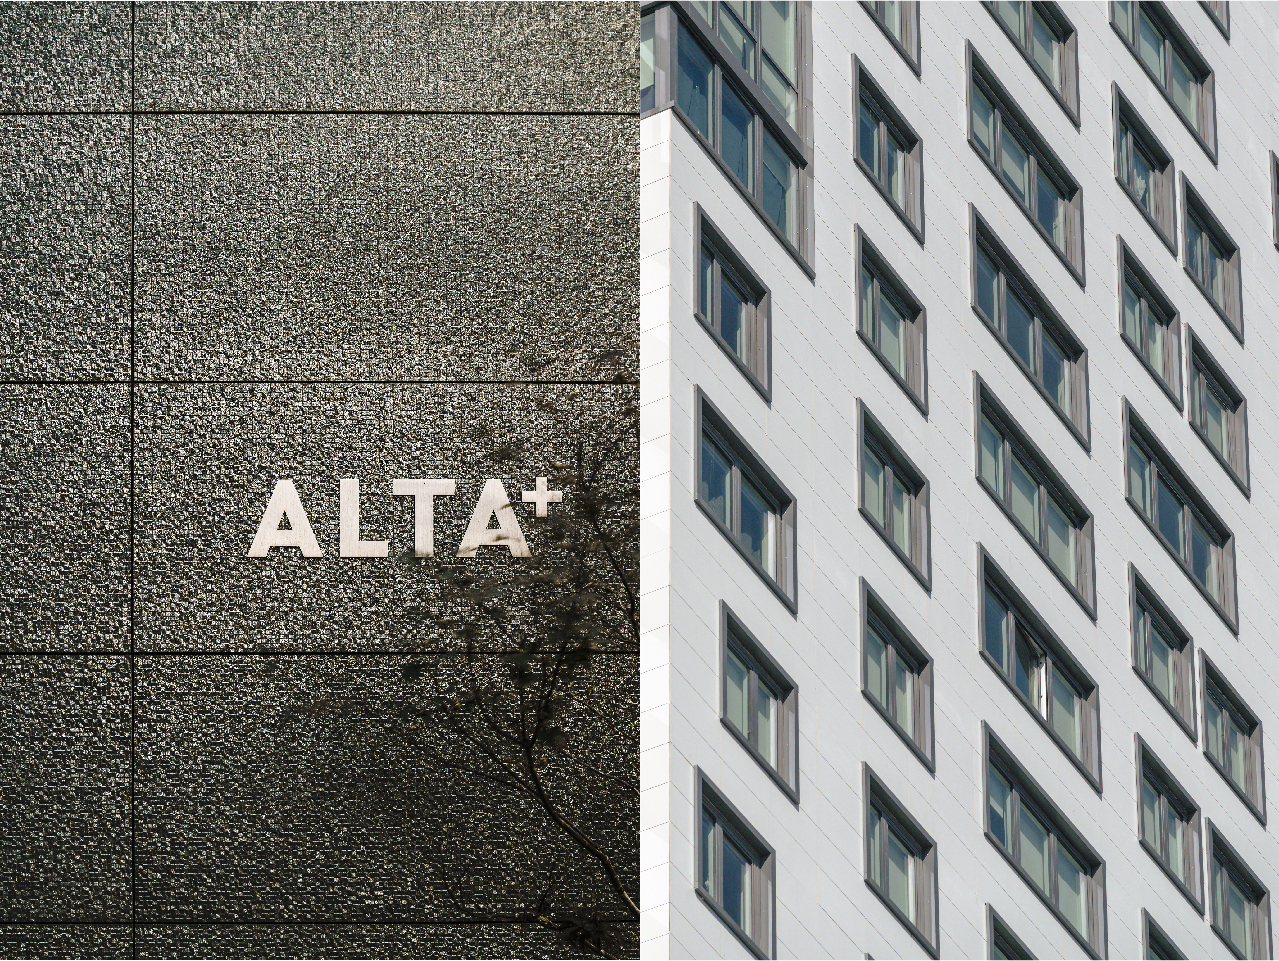 Alta LIC Tower Custom TEXTURED porcelain facade and Modern window trim details at porcelain cladding